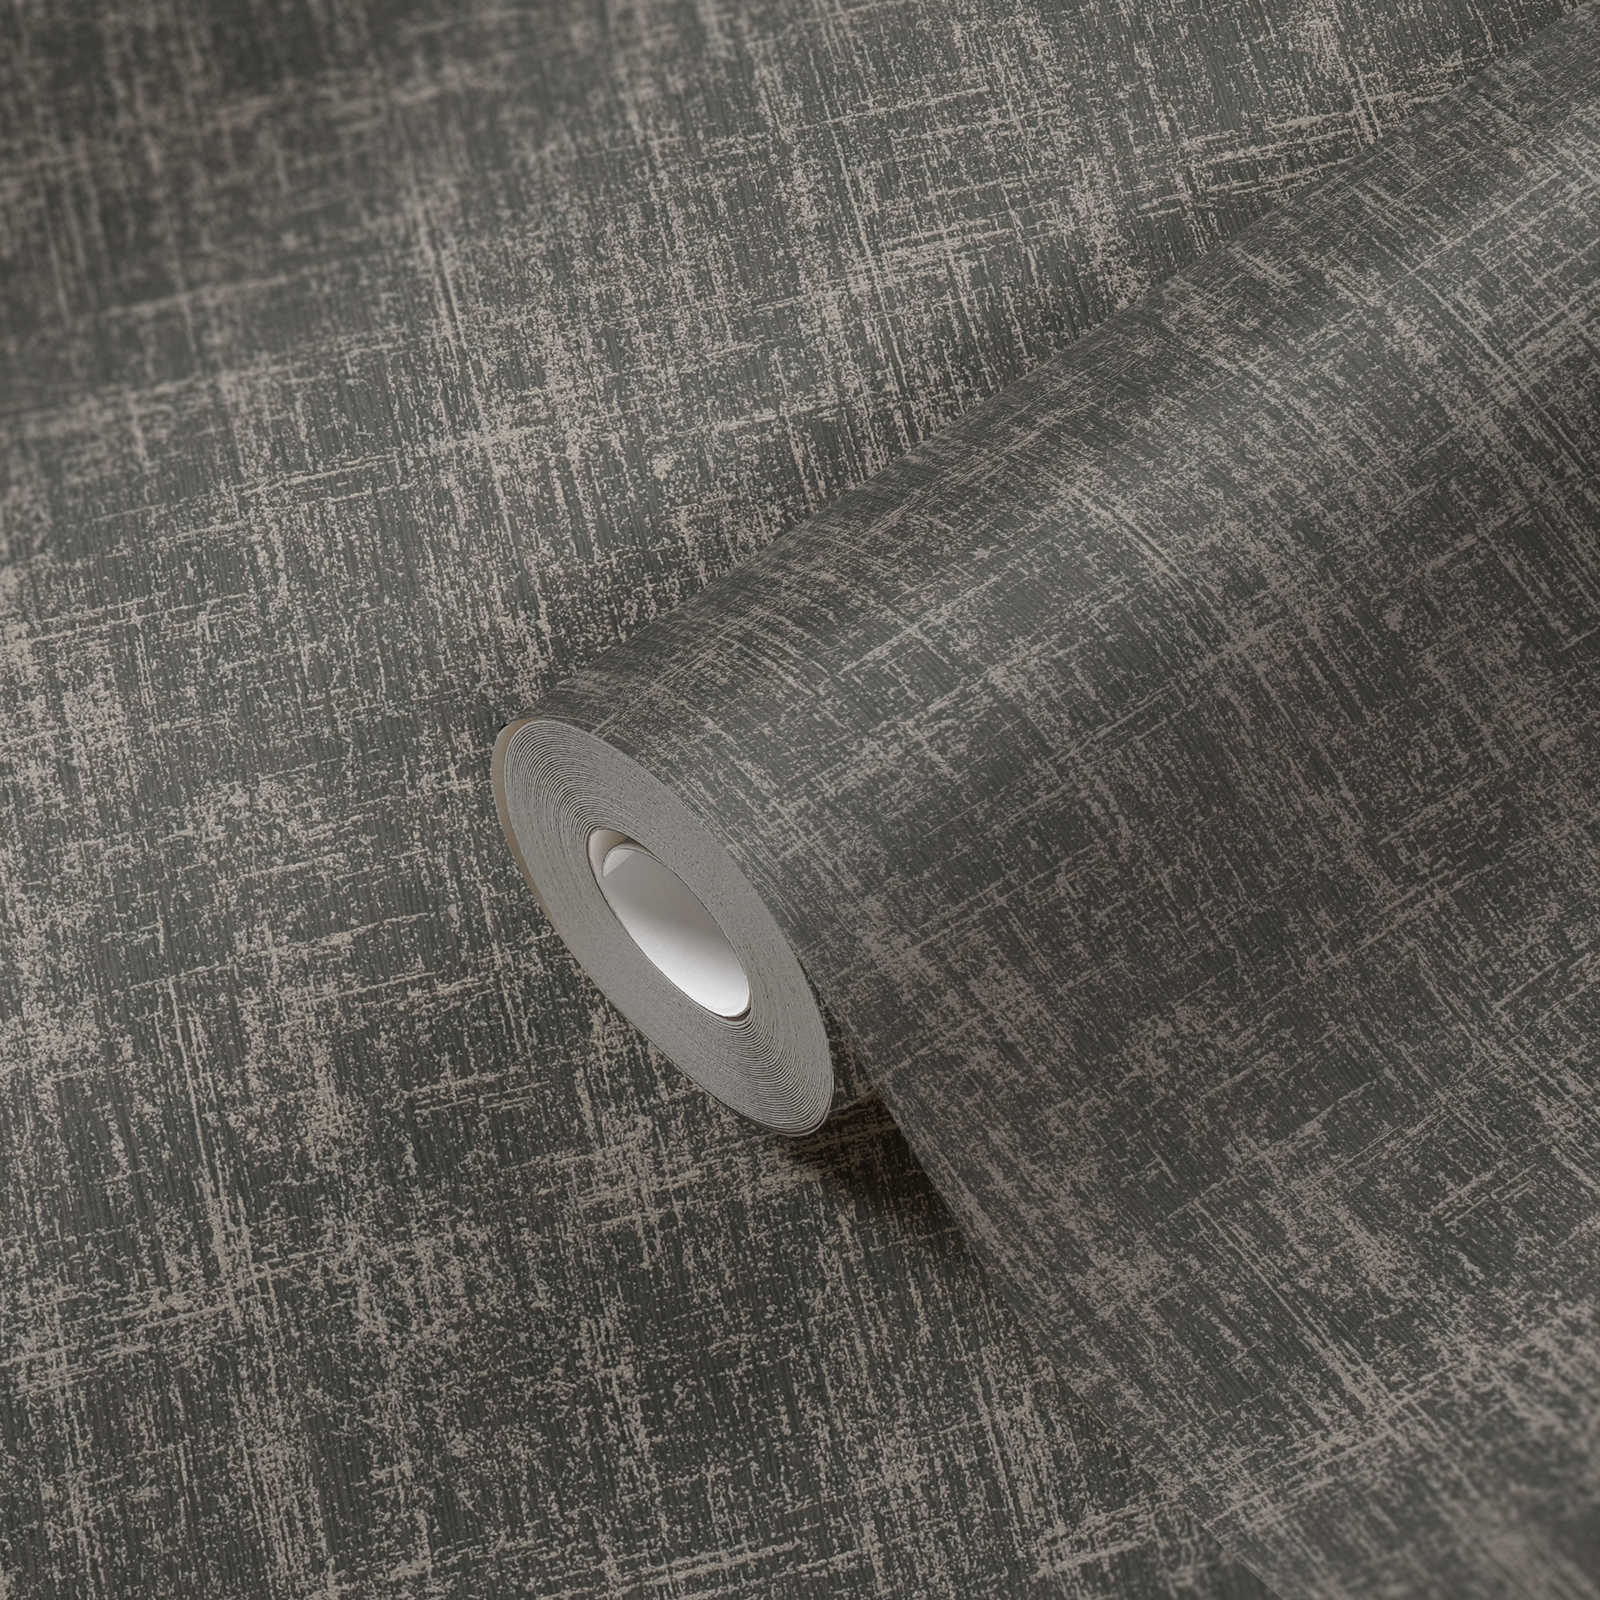             Non-woven wallpaper with mottled metallic effect - black, grey
        